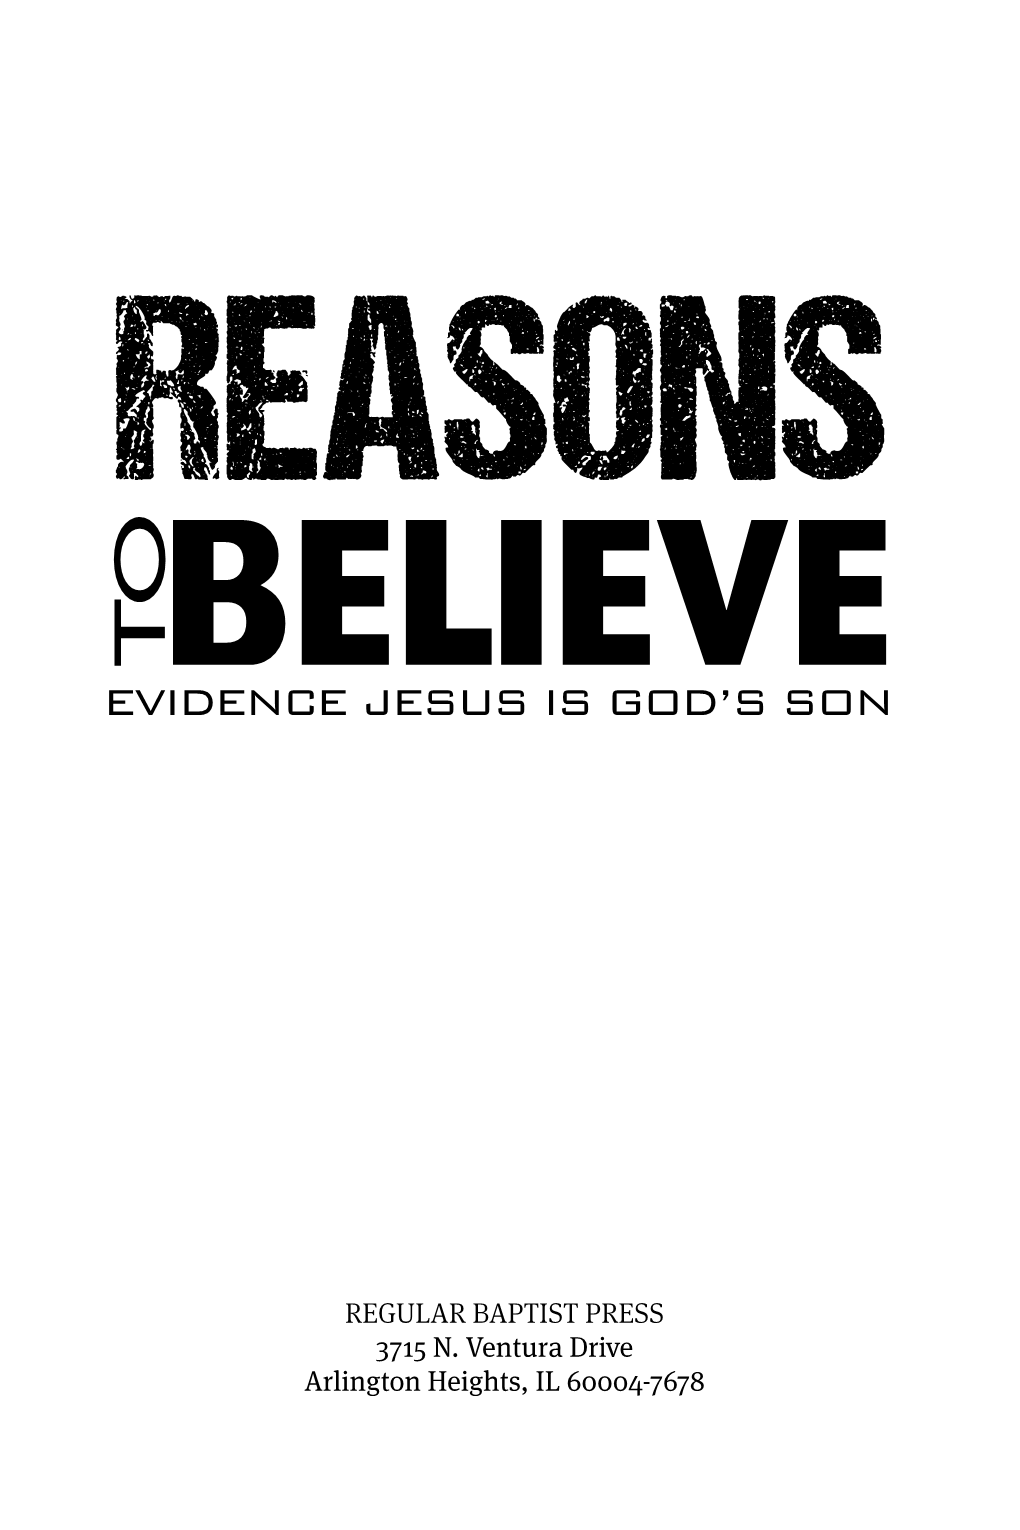 Evidence Jesus Is God's